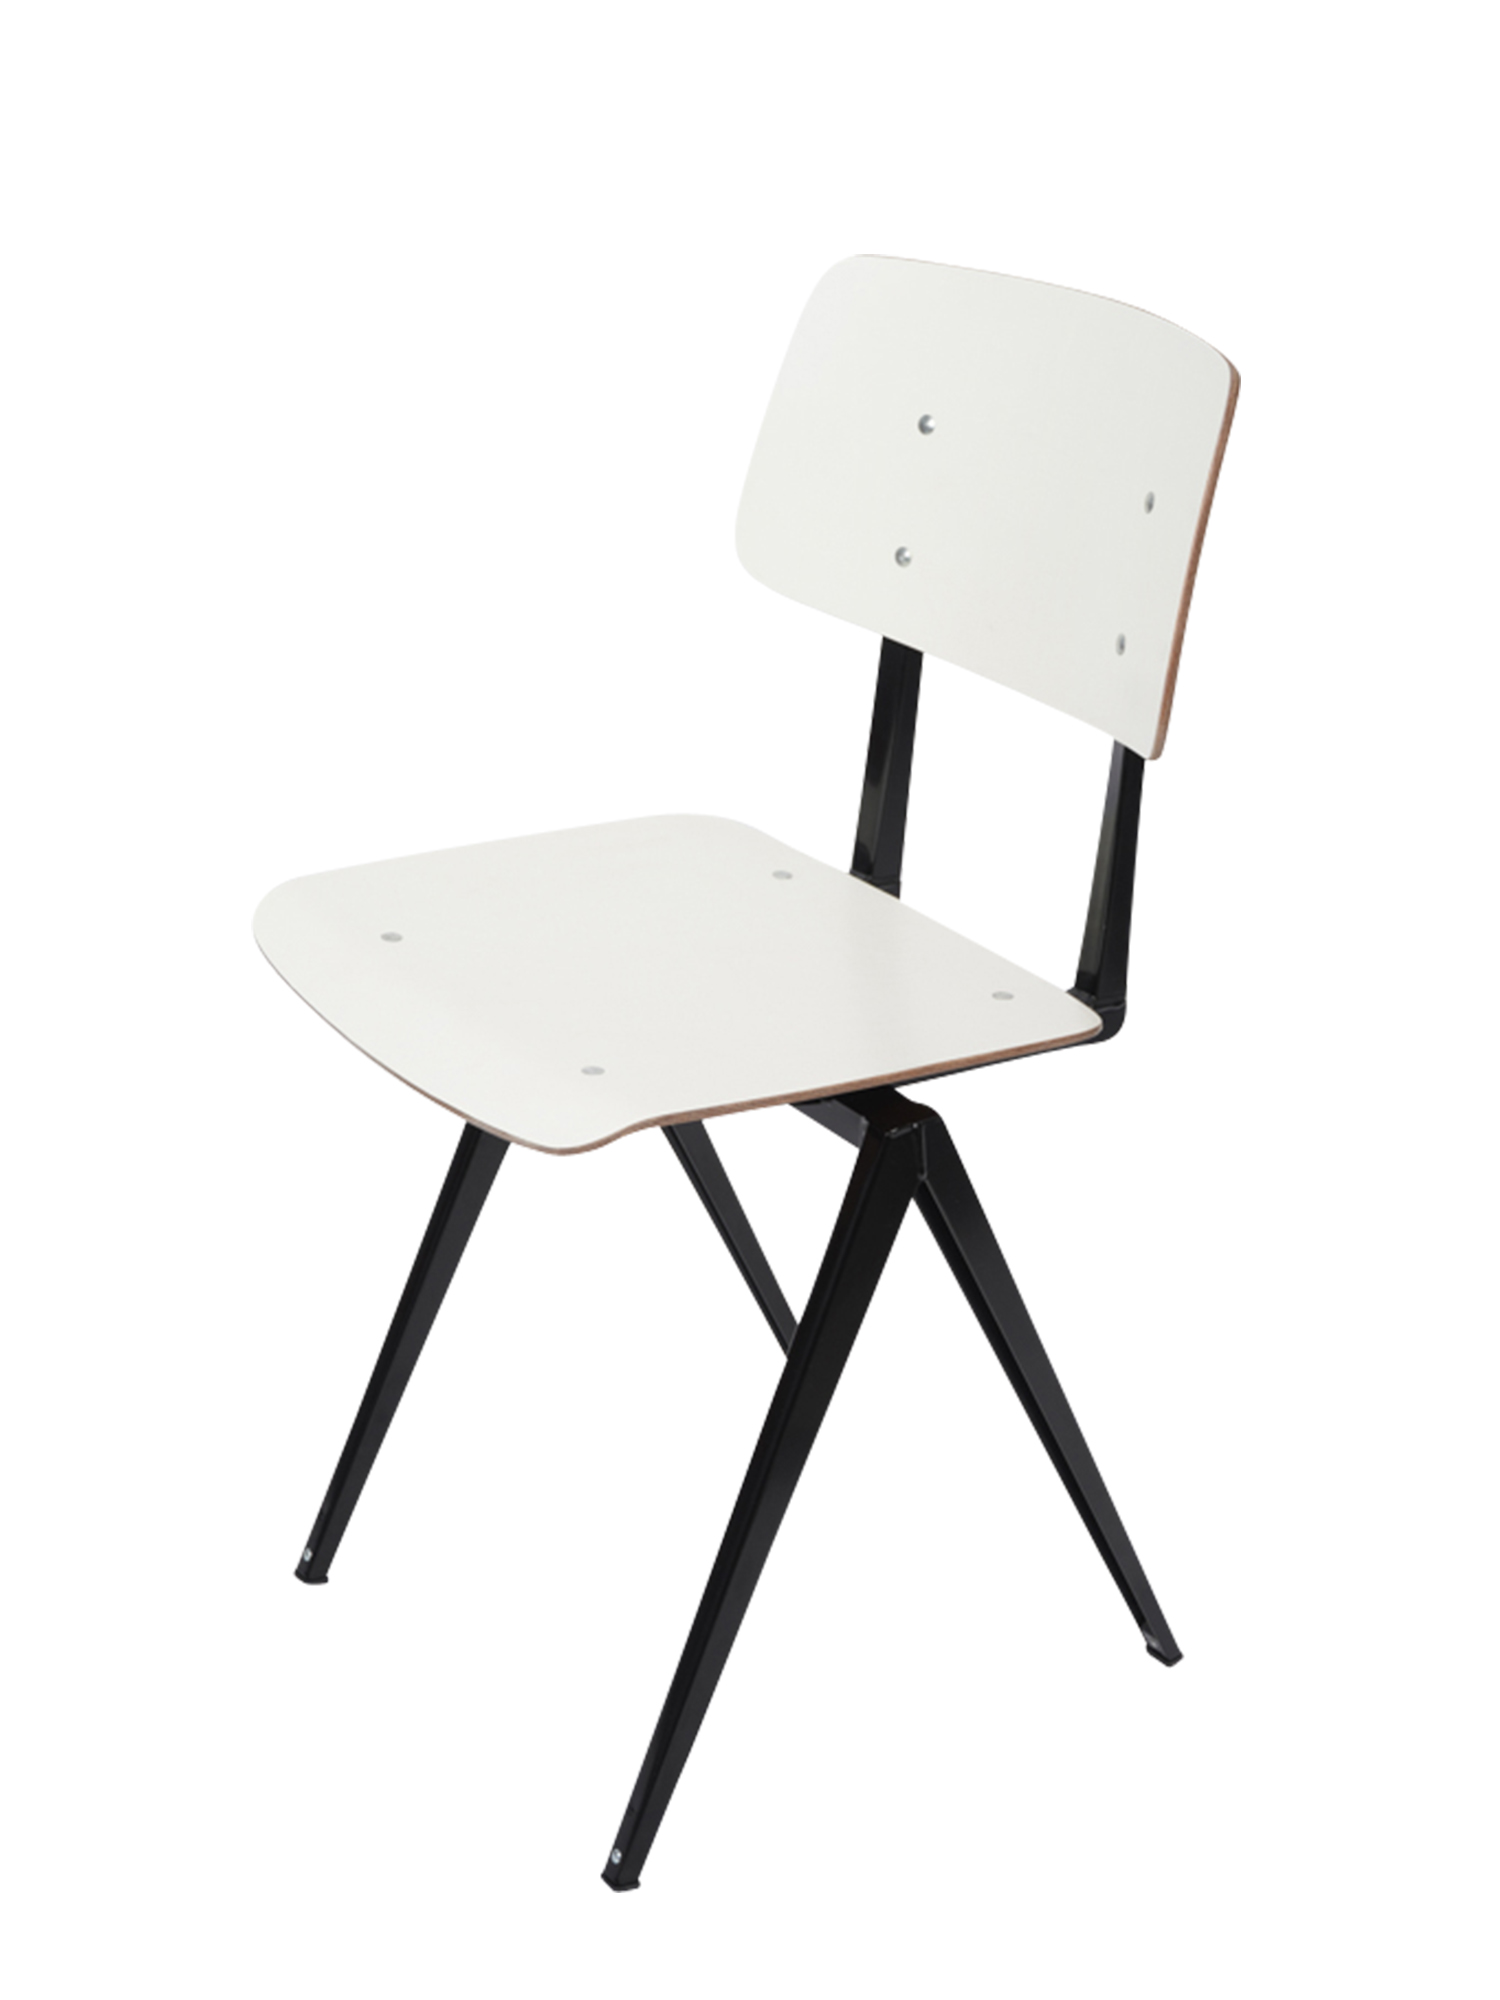 [GALVANITAS] S16 Side Chair Black/White